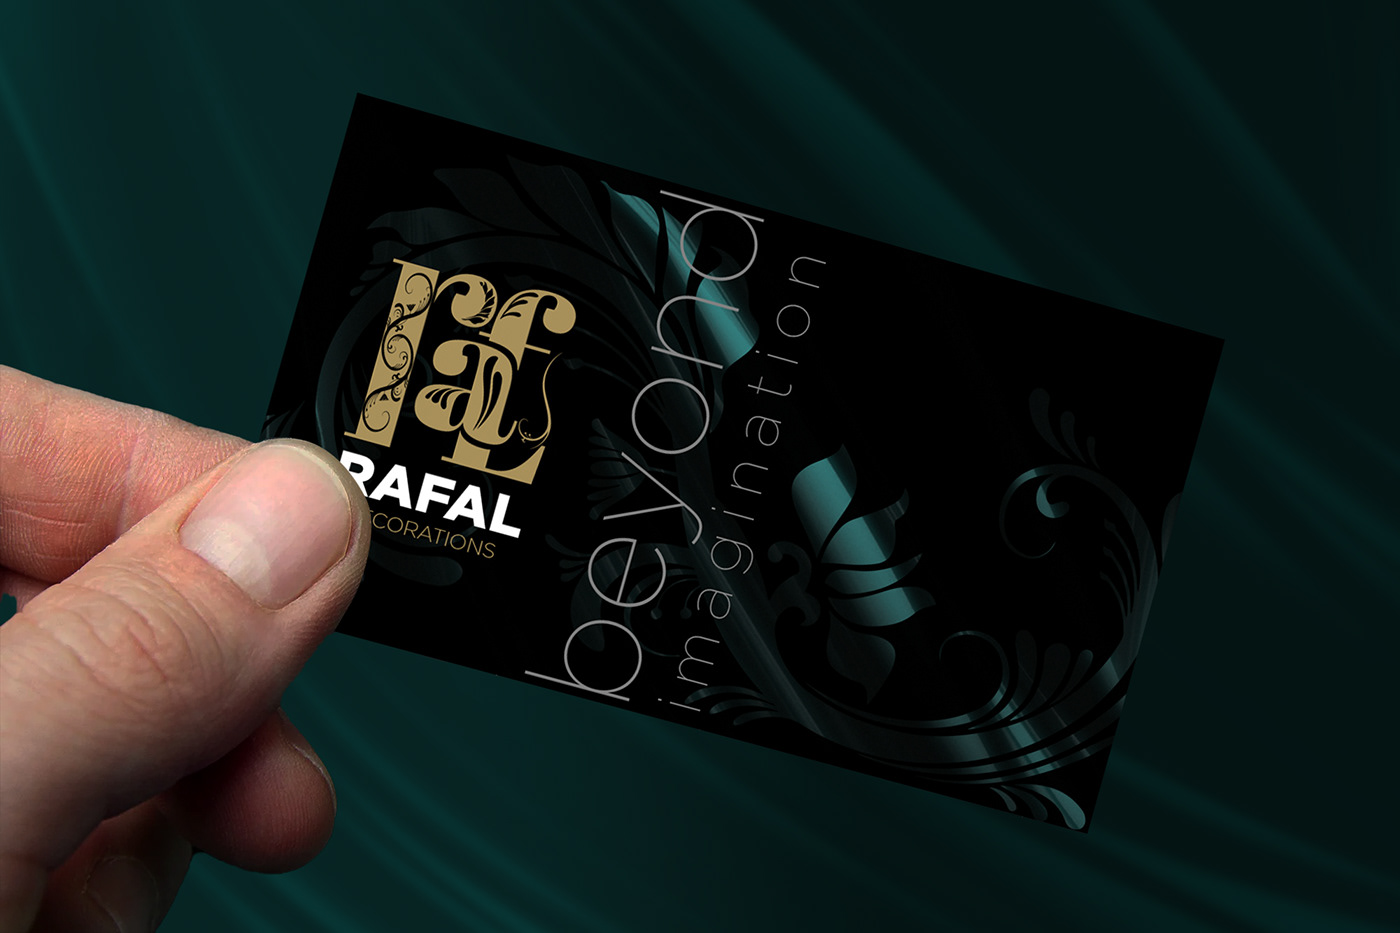 Rafal business card